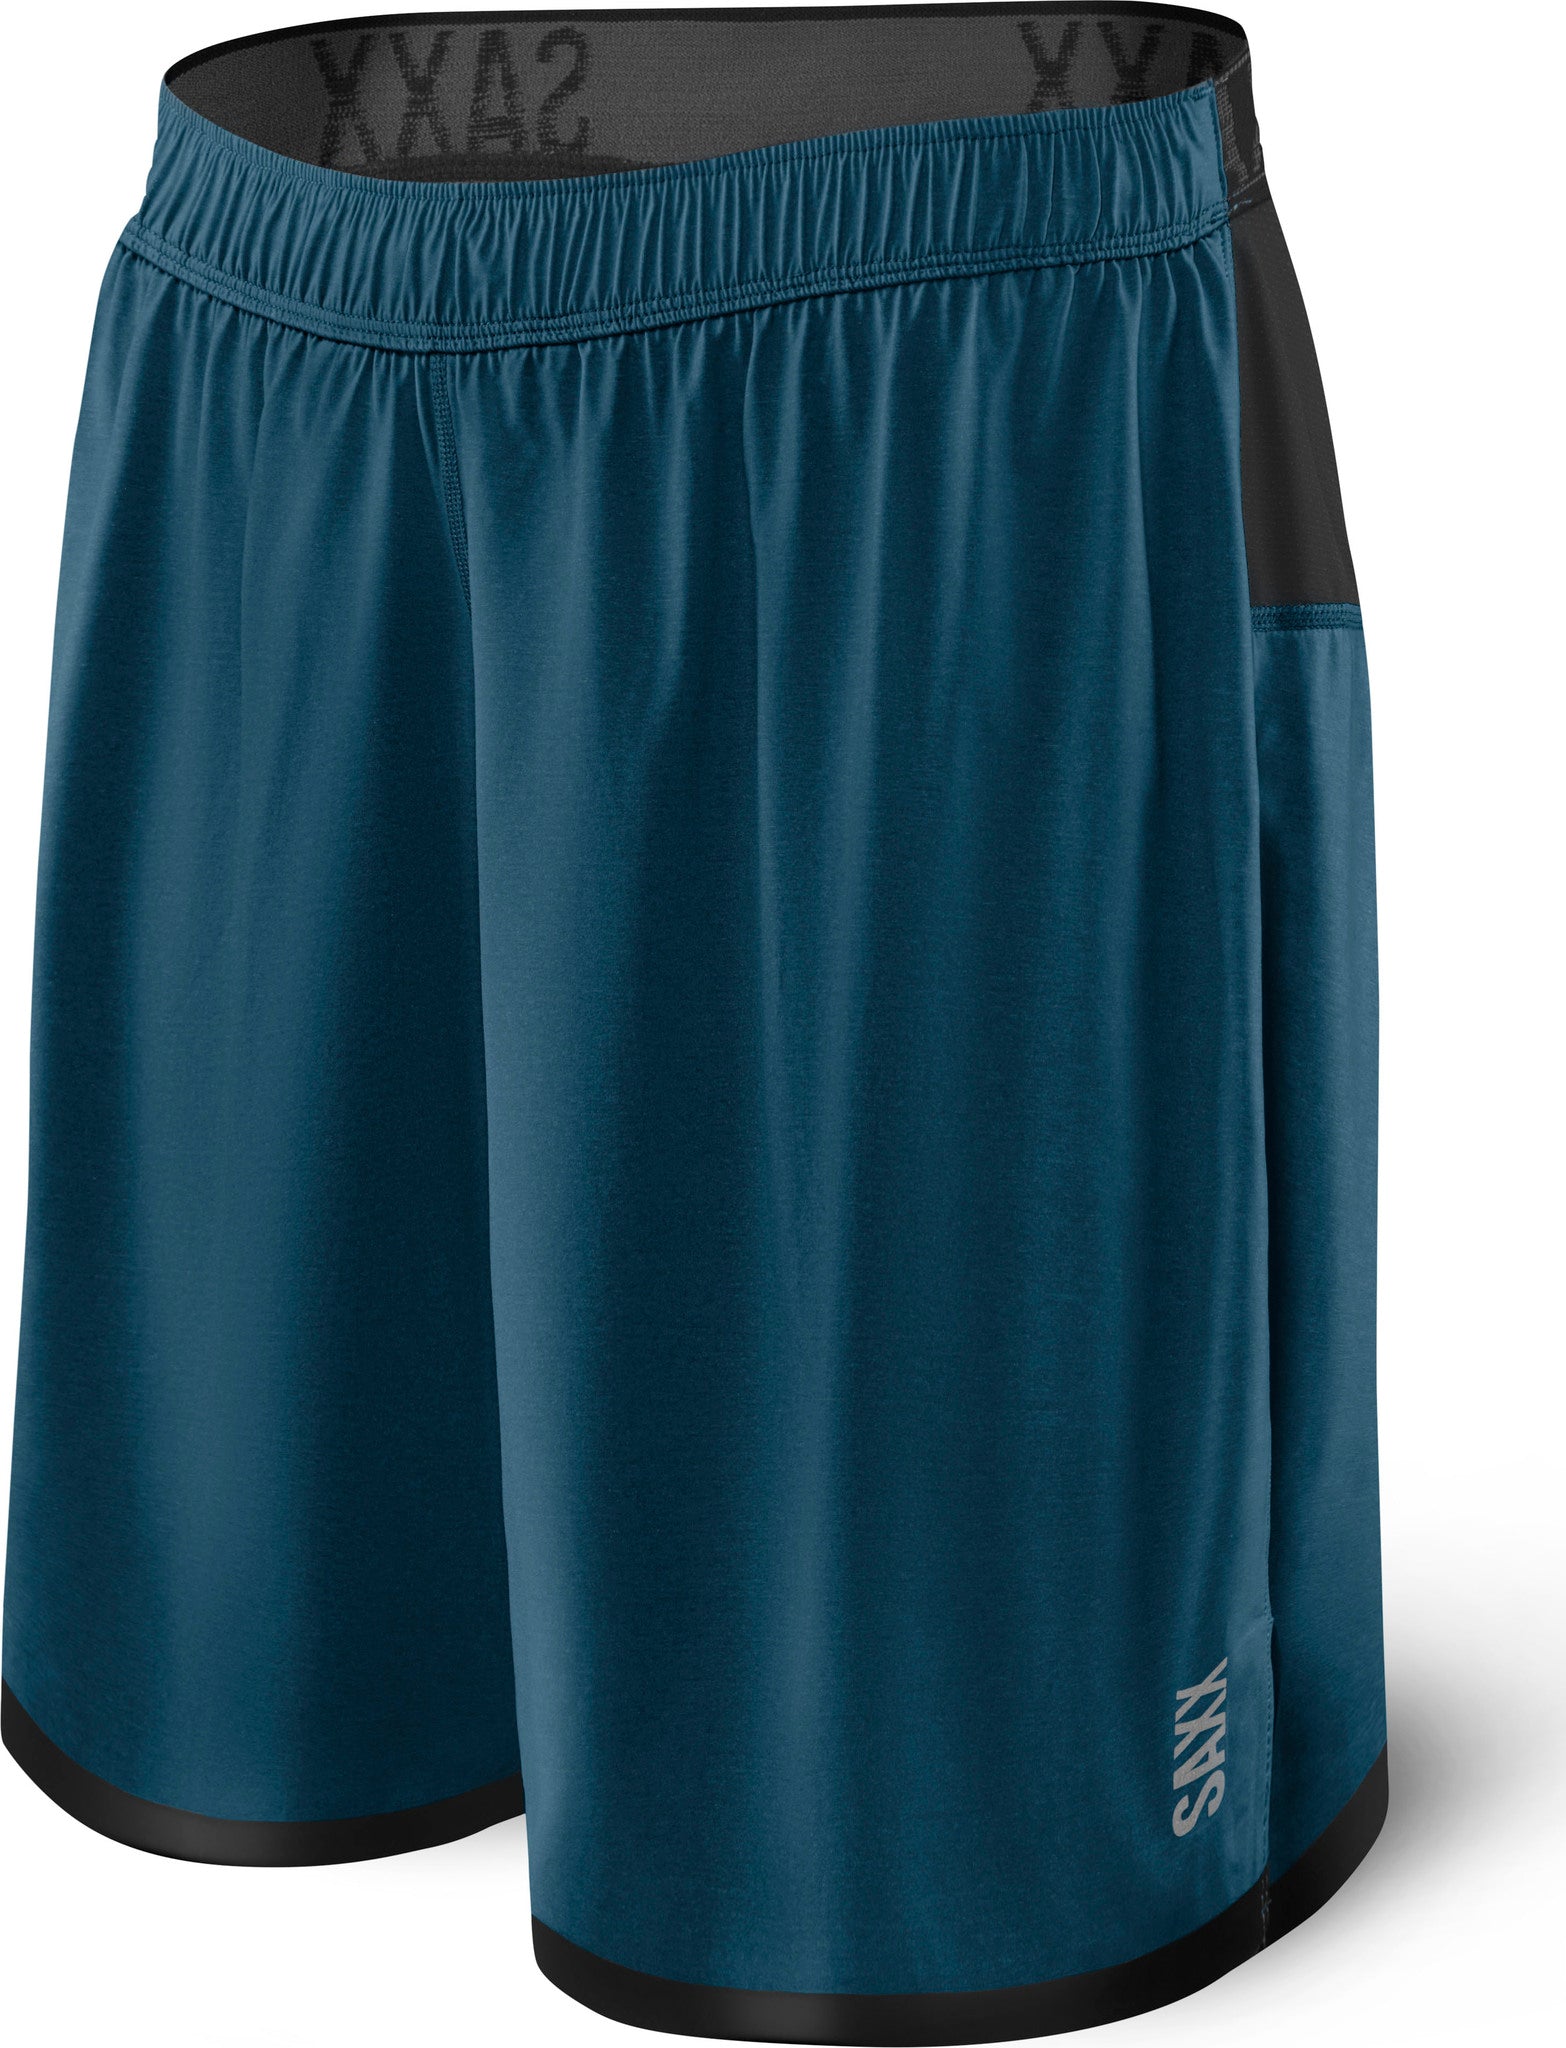 SAXX Underwear Pilot 2N1 Shorts - Men's | The Last Hunt